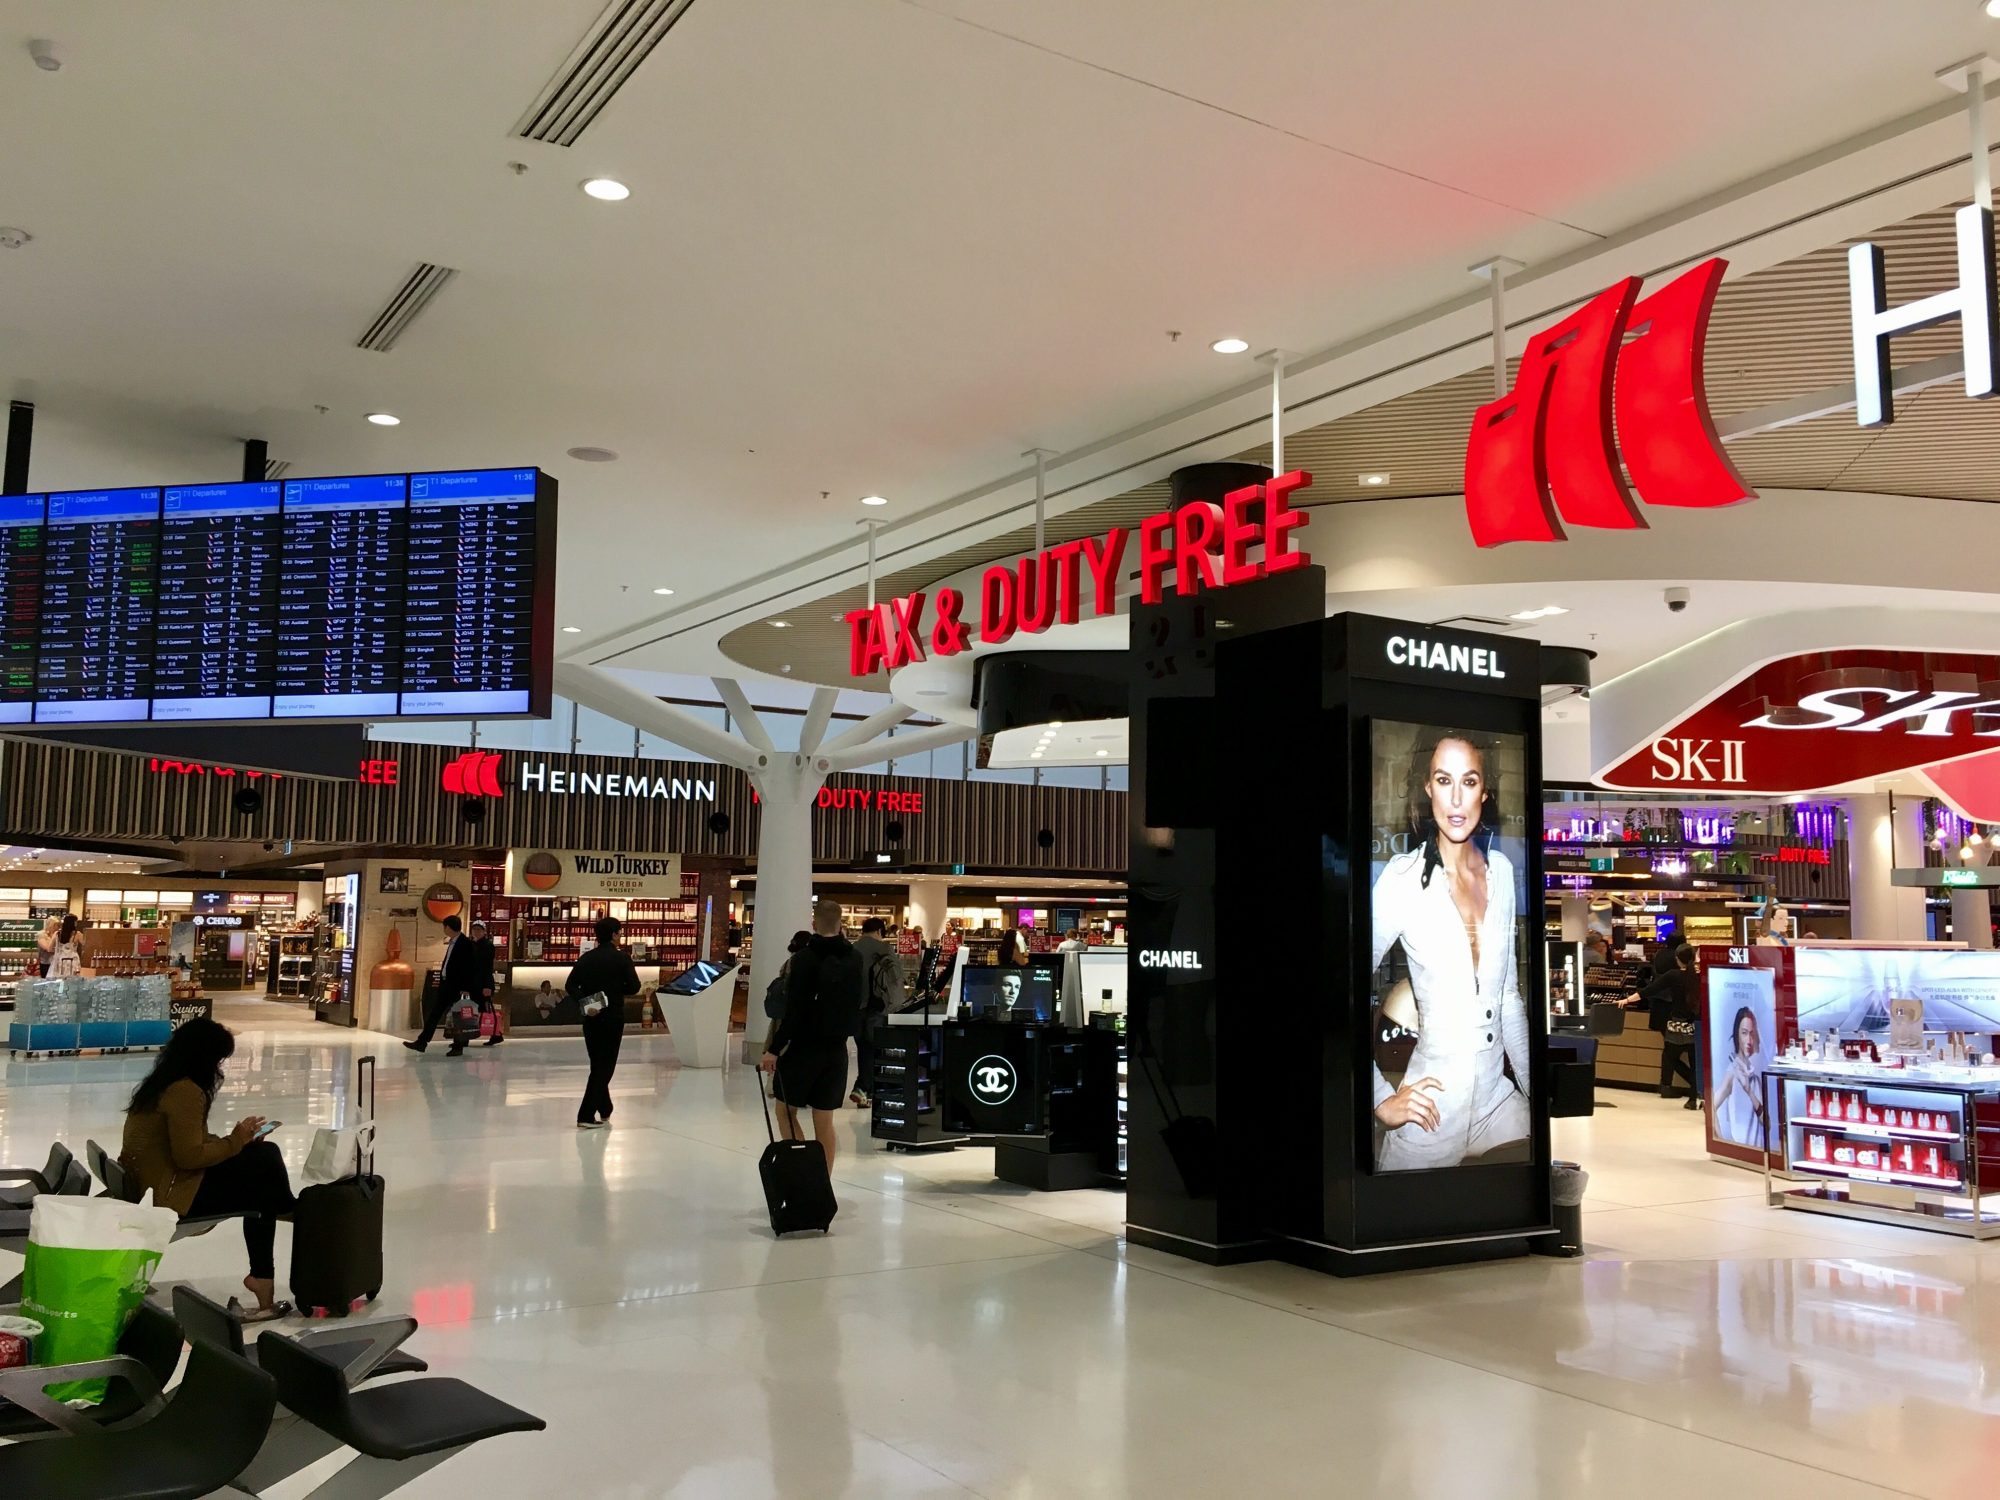 Duty free shopping in Sydney, Australia's international airport. New Zealand and Australia will shortly resume trans-Tasman travel. 